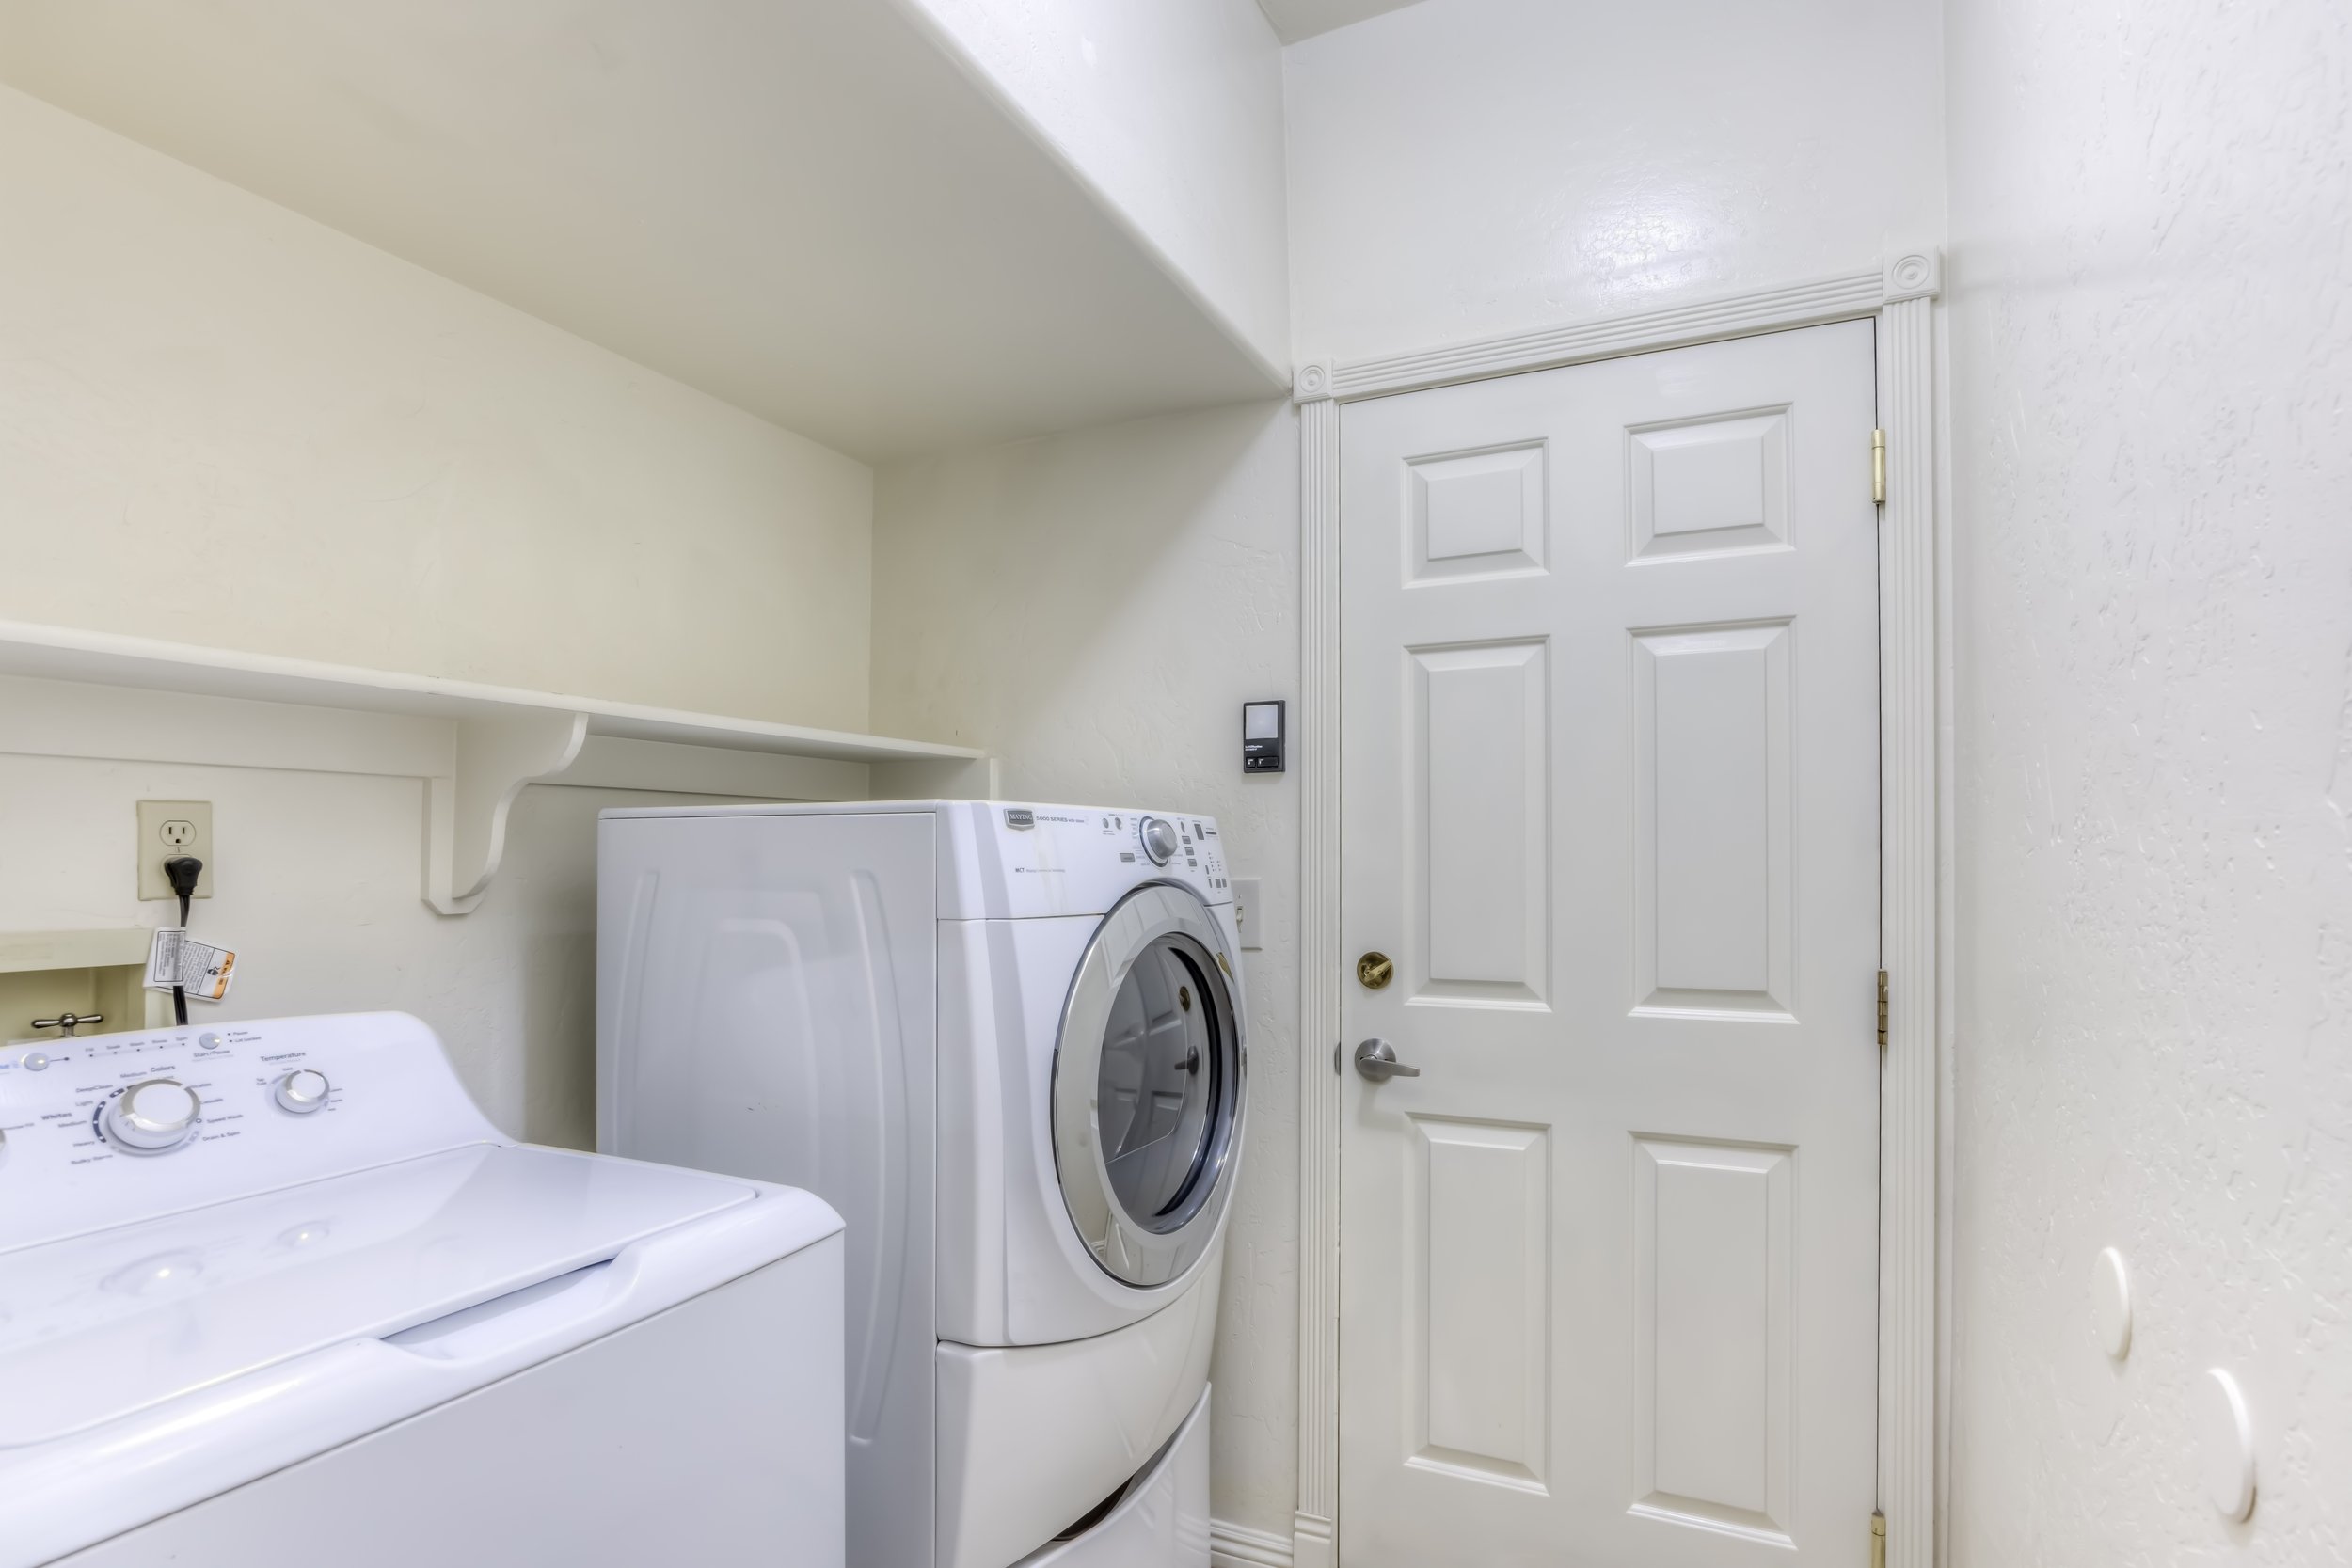 35 Laundry Room.jpg